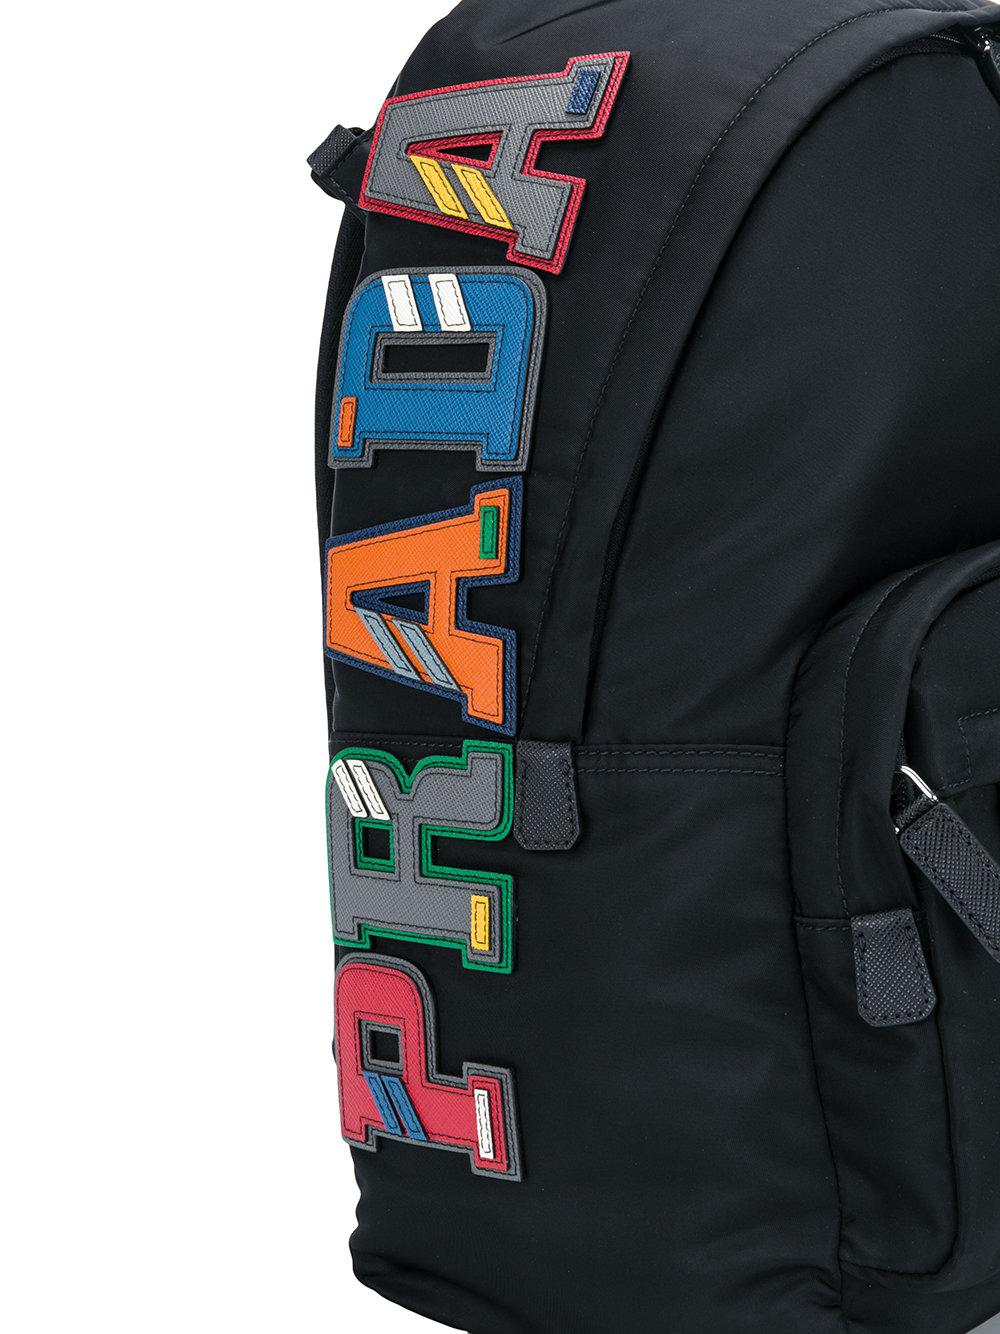 prada logo backpack